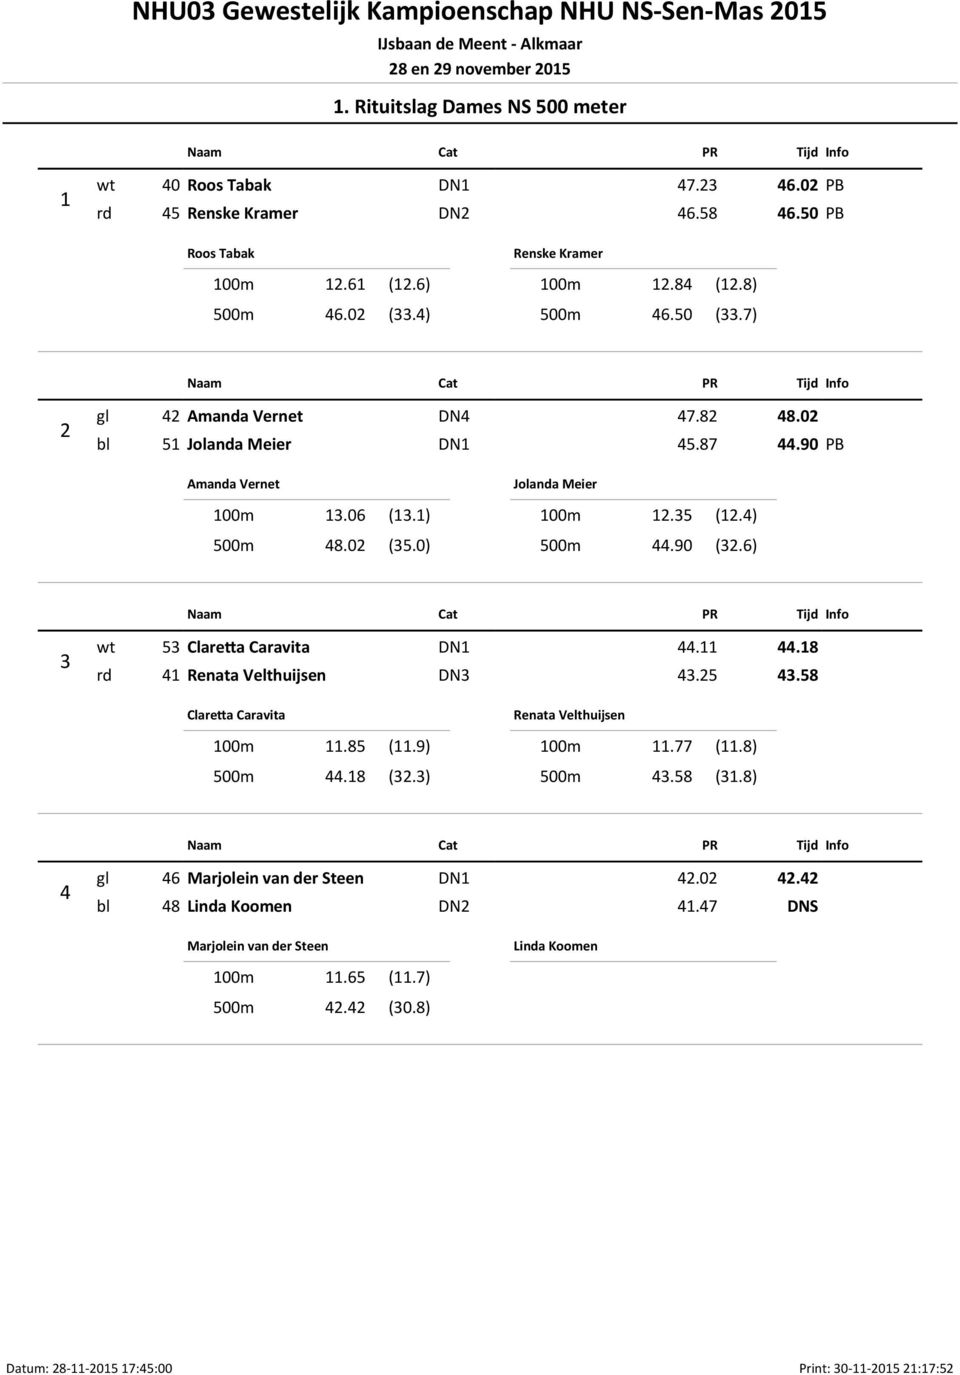 6) 3 wt 53 Clare a Caravita DN1 44.11 44.18 rd 41 Renata Velthuijsen DN3 43.25 43.58 Clare a Caravita 100m 11.85 (11.9) 500m 44.18 (32.3) Renata Velthuijsen 100m 11.77 (11.8) 500m 43.58 (31.